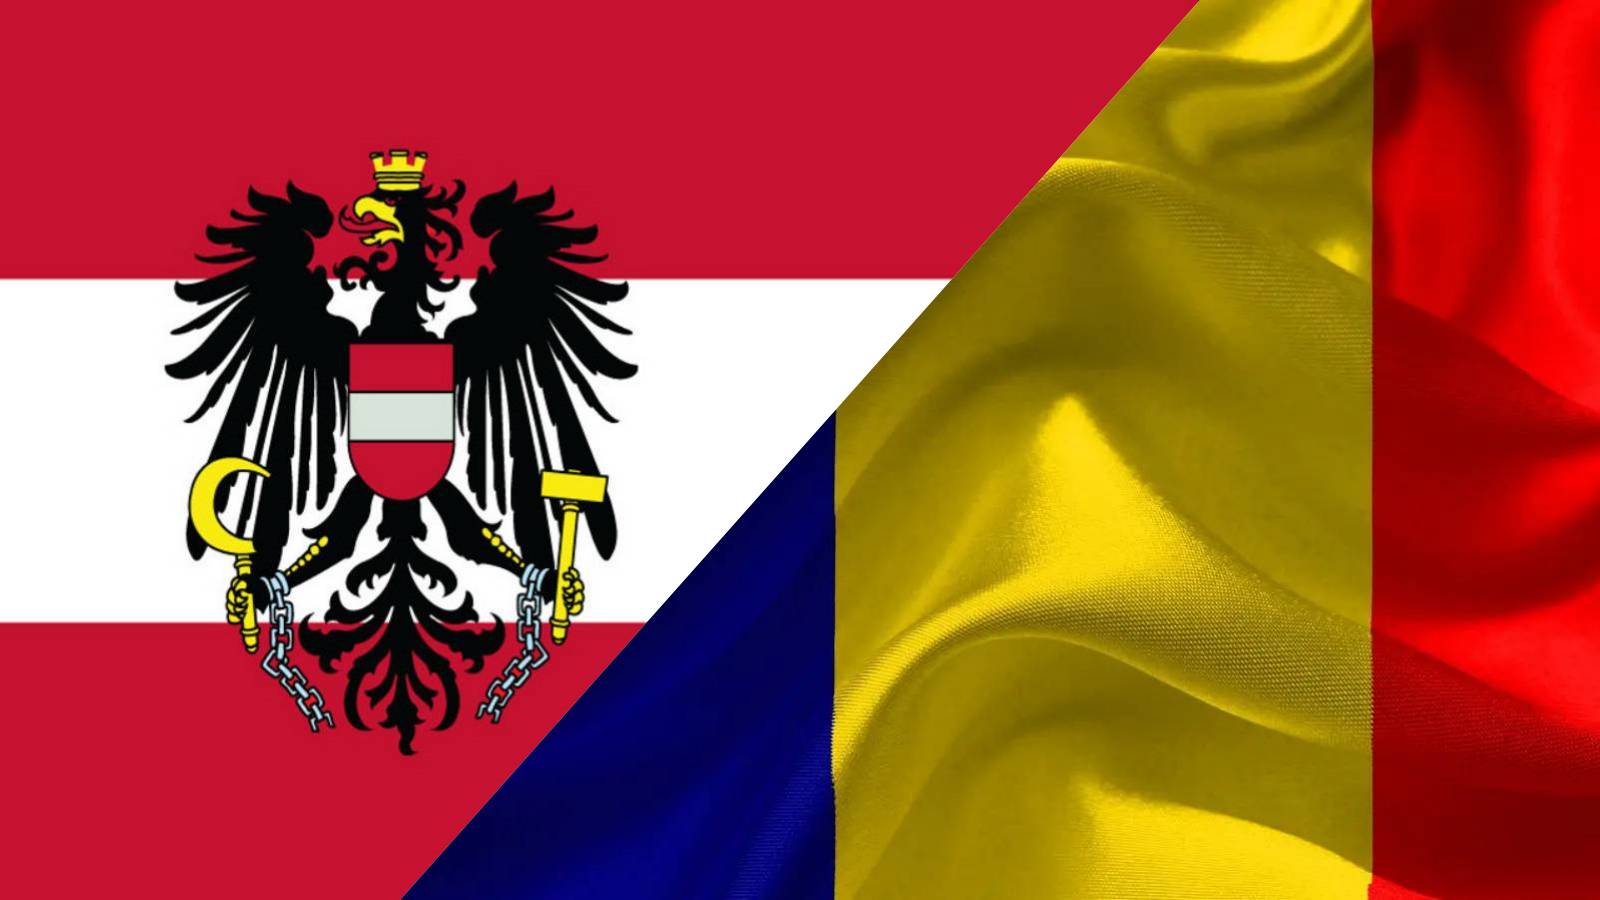 Austria Ramane Total IMPOTRIVA Romaniei Vestile Proaste Aderarea Schengen